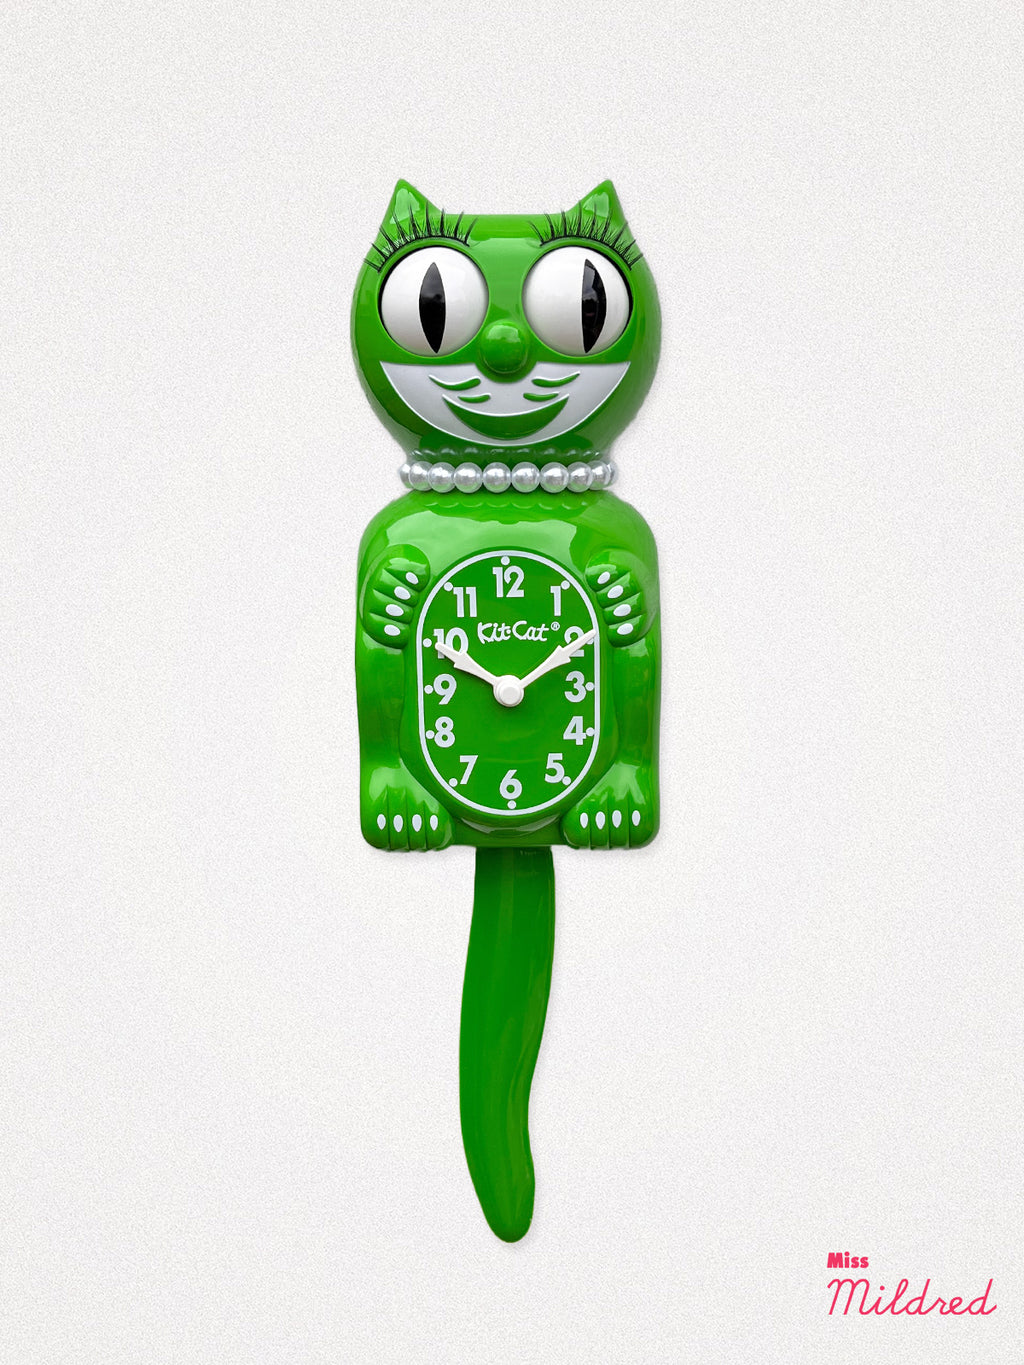 Kit Cat Clock - Original Large Size - Grass Green Necklace